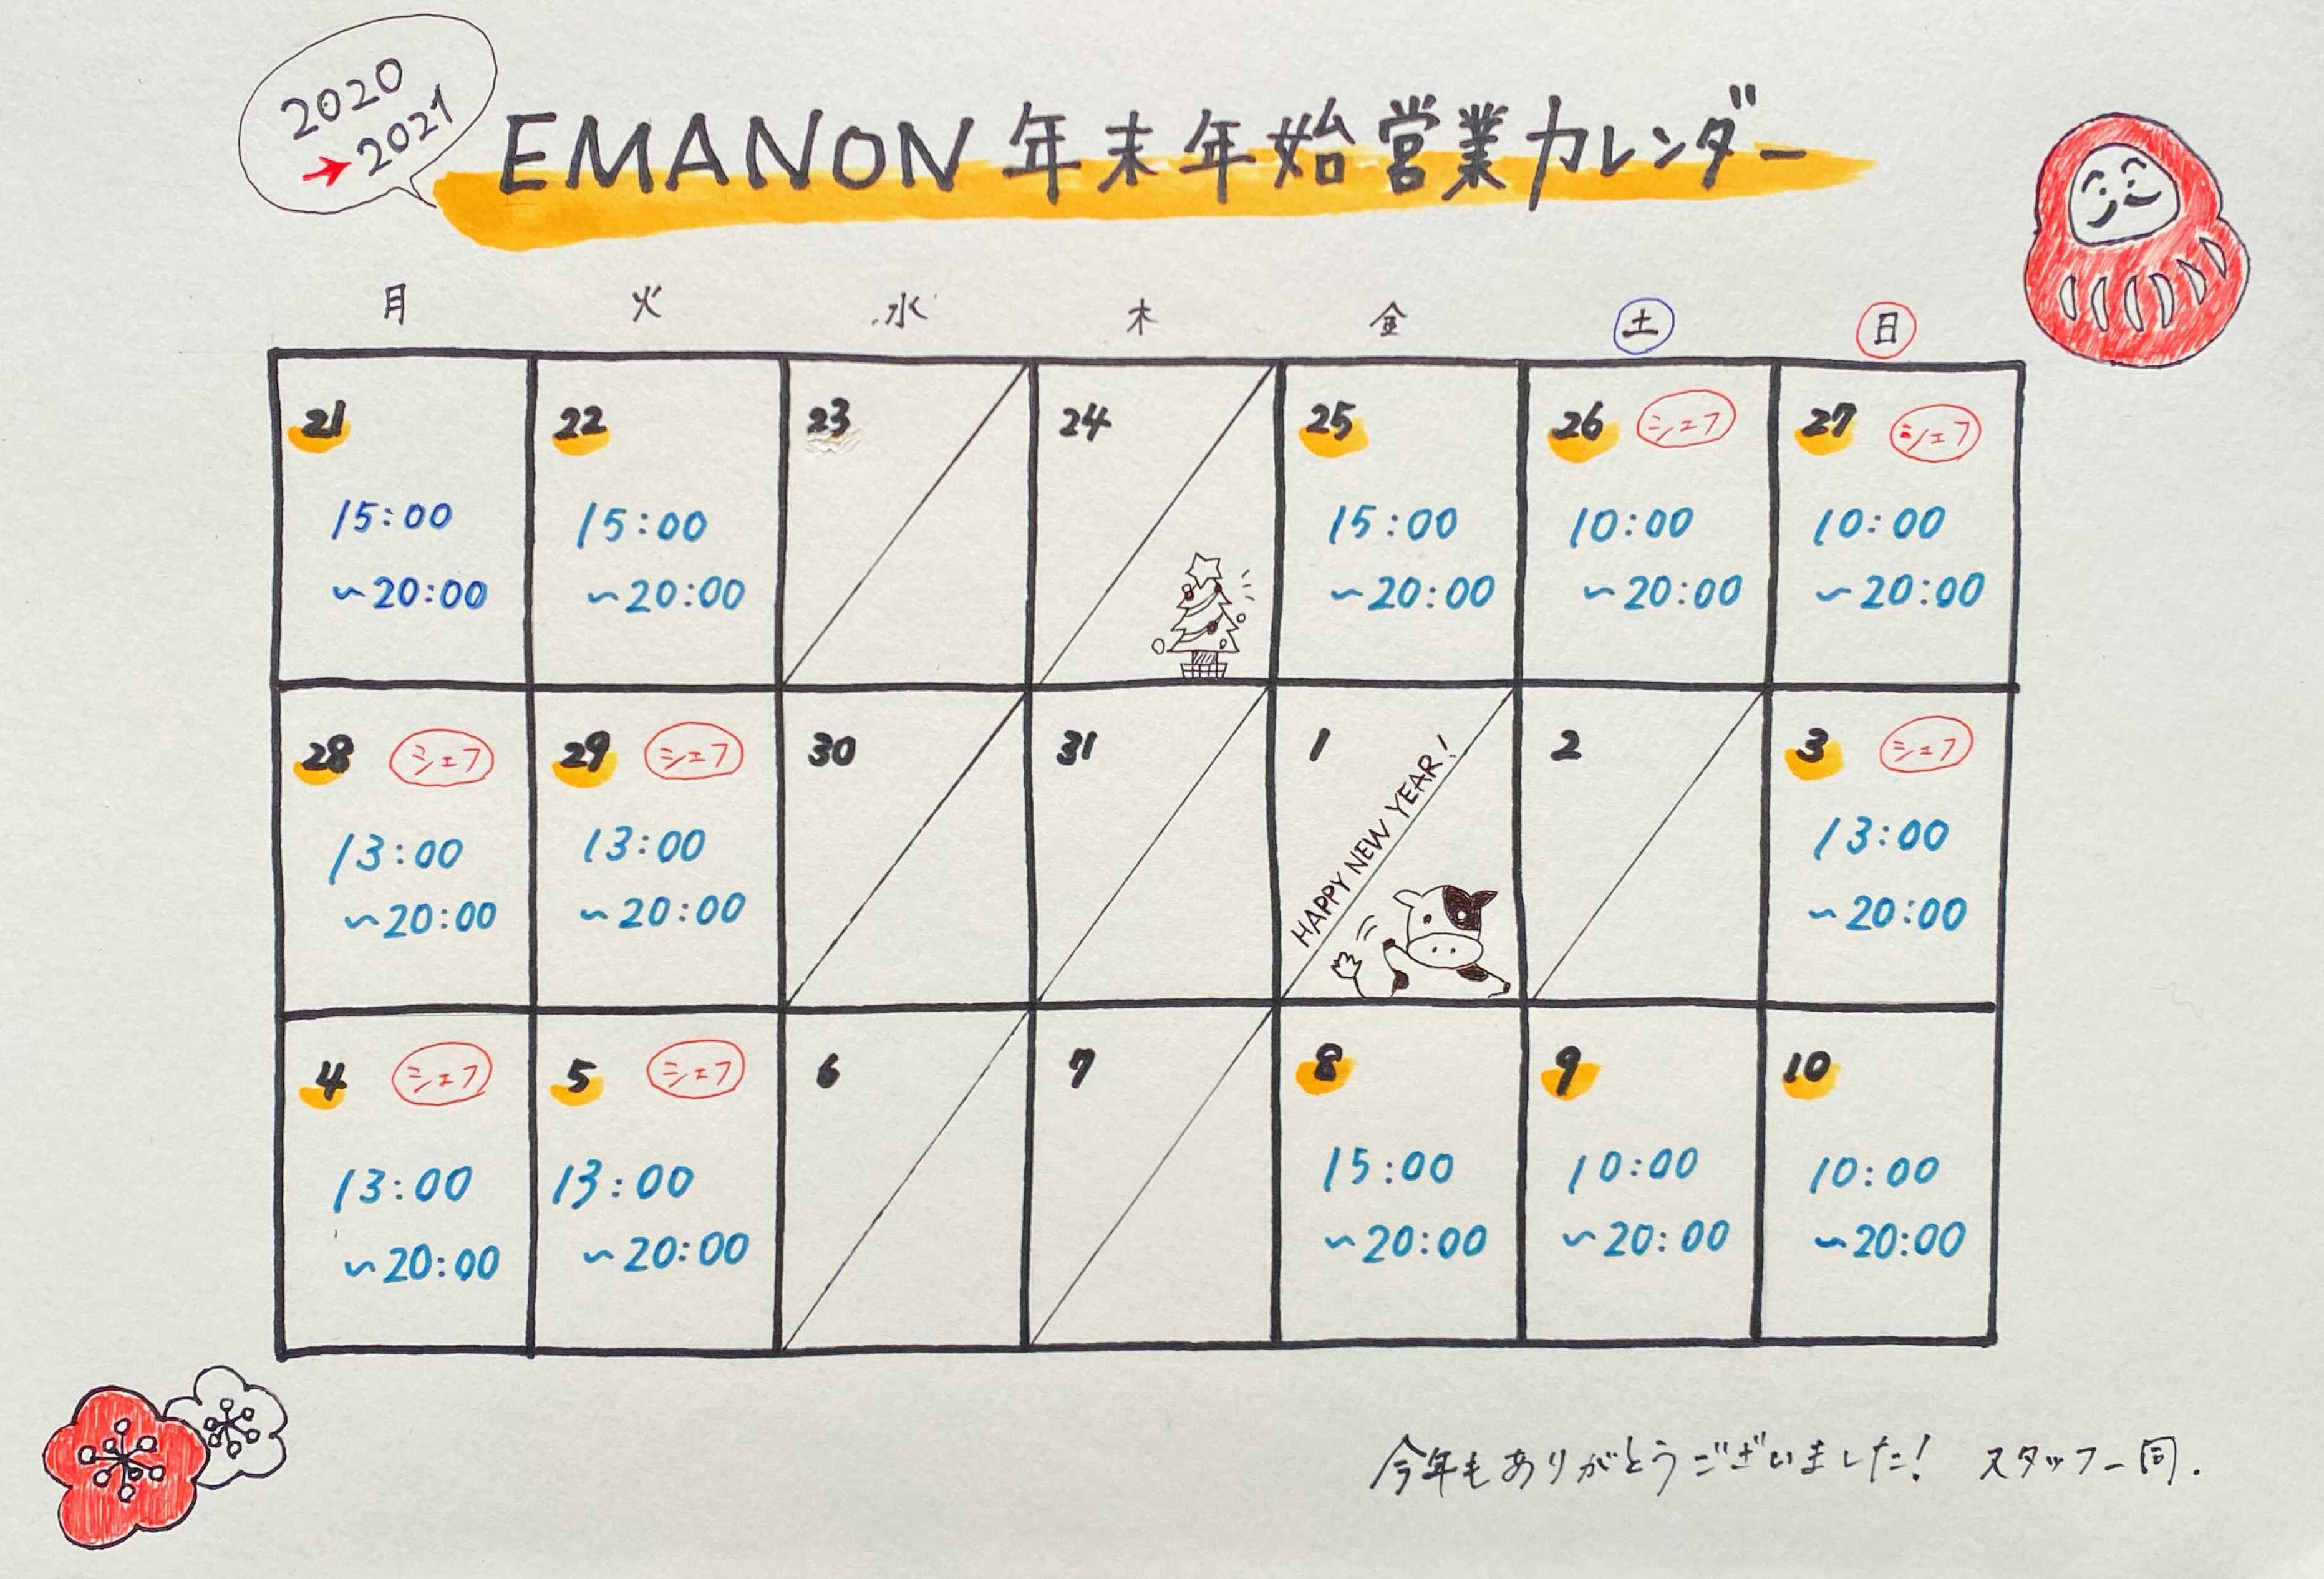 Calendar 年末年始の営業案内 21 コミュニティ カフェ Emanon 福島県白河市の古民家リノベーションカフェ